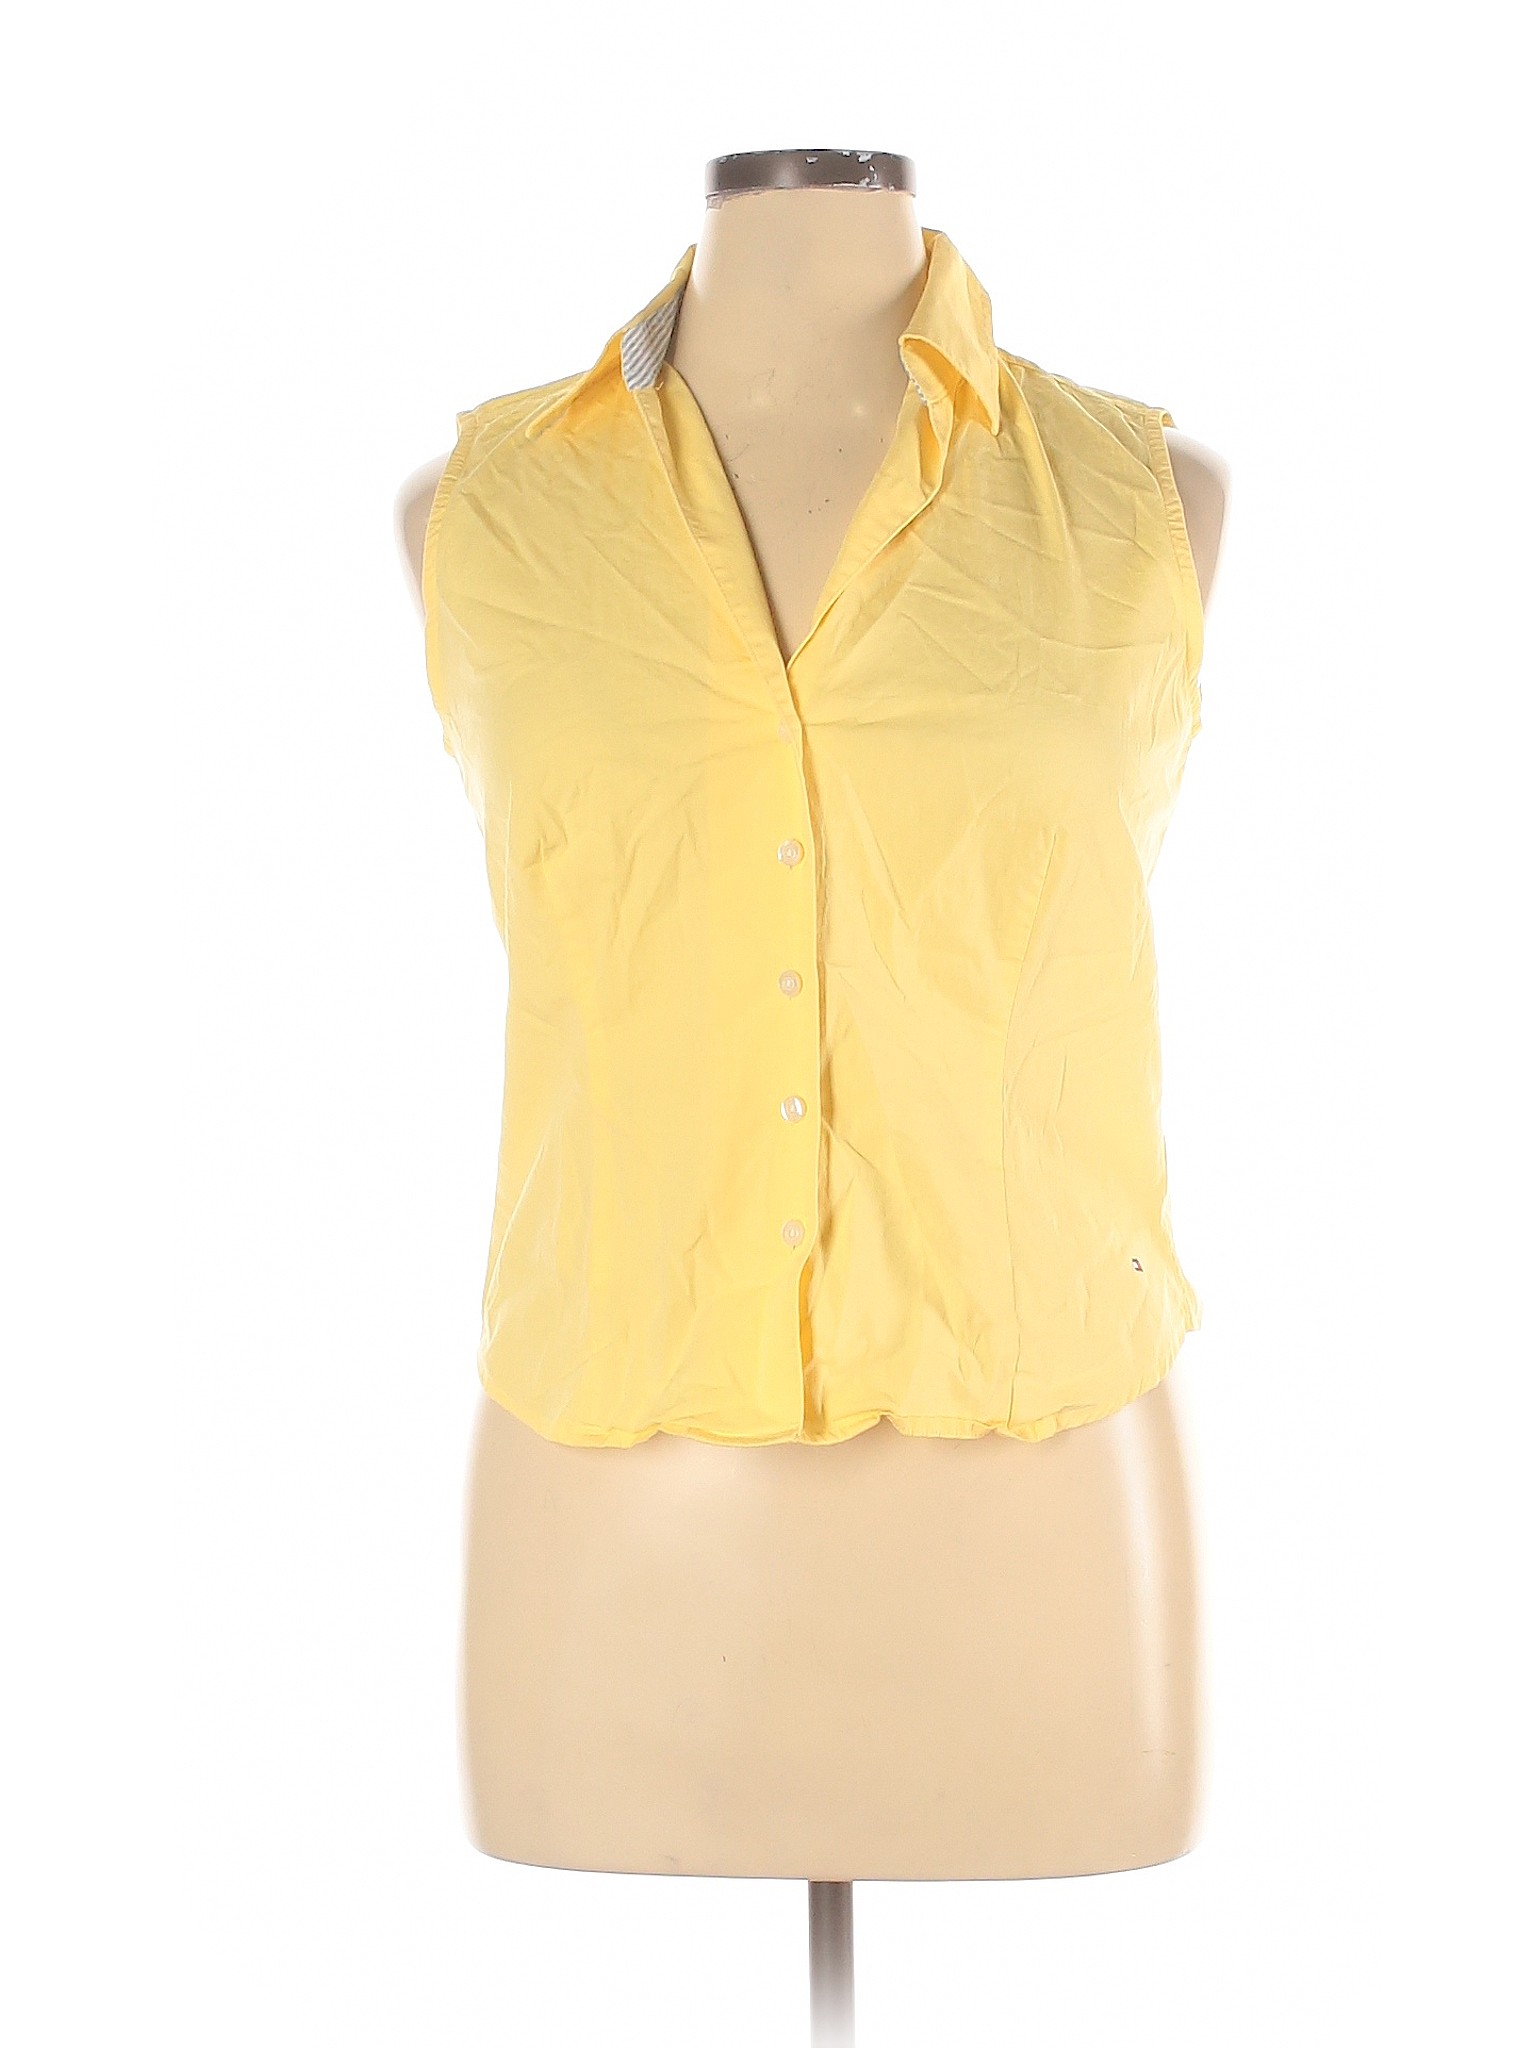 Tommy Hilfiger Women Yellow Sleeveless Button-Down Shirt 14 | eBay